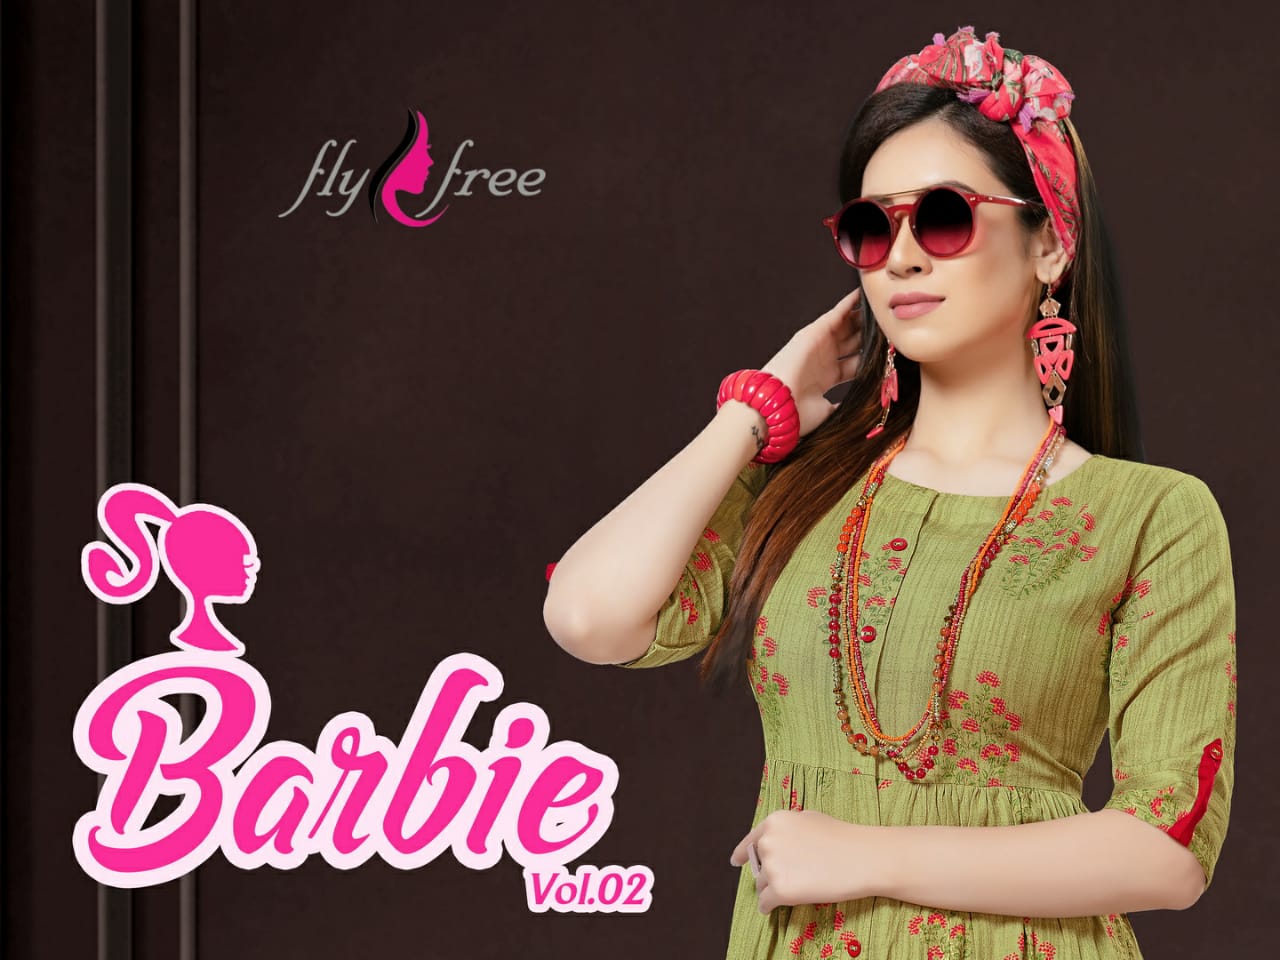 Fly Free Barbie vol 2 frock style rayon kurti design wholesaer best Price